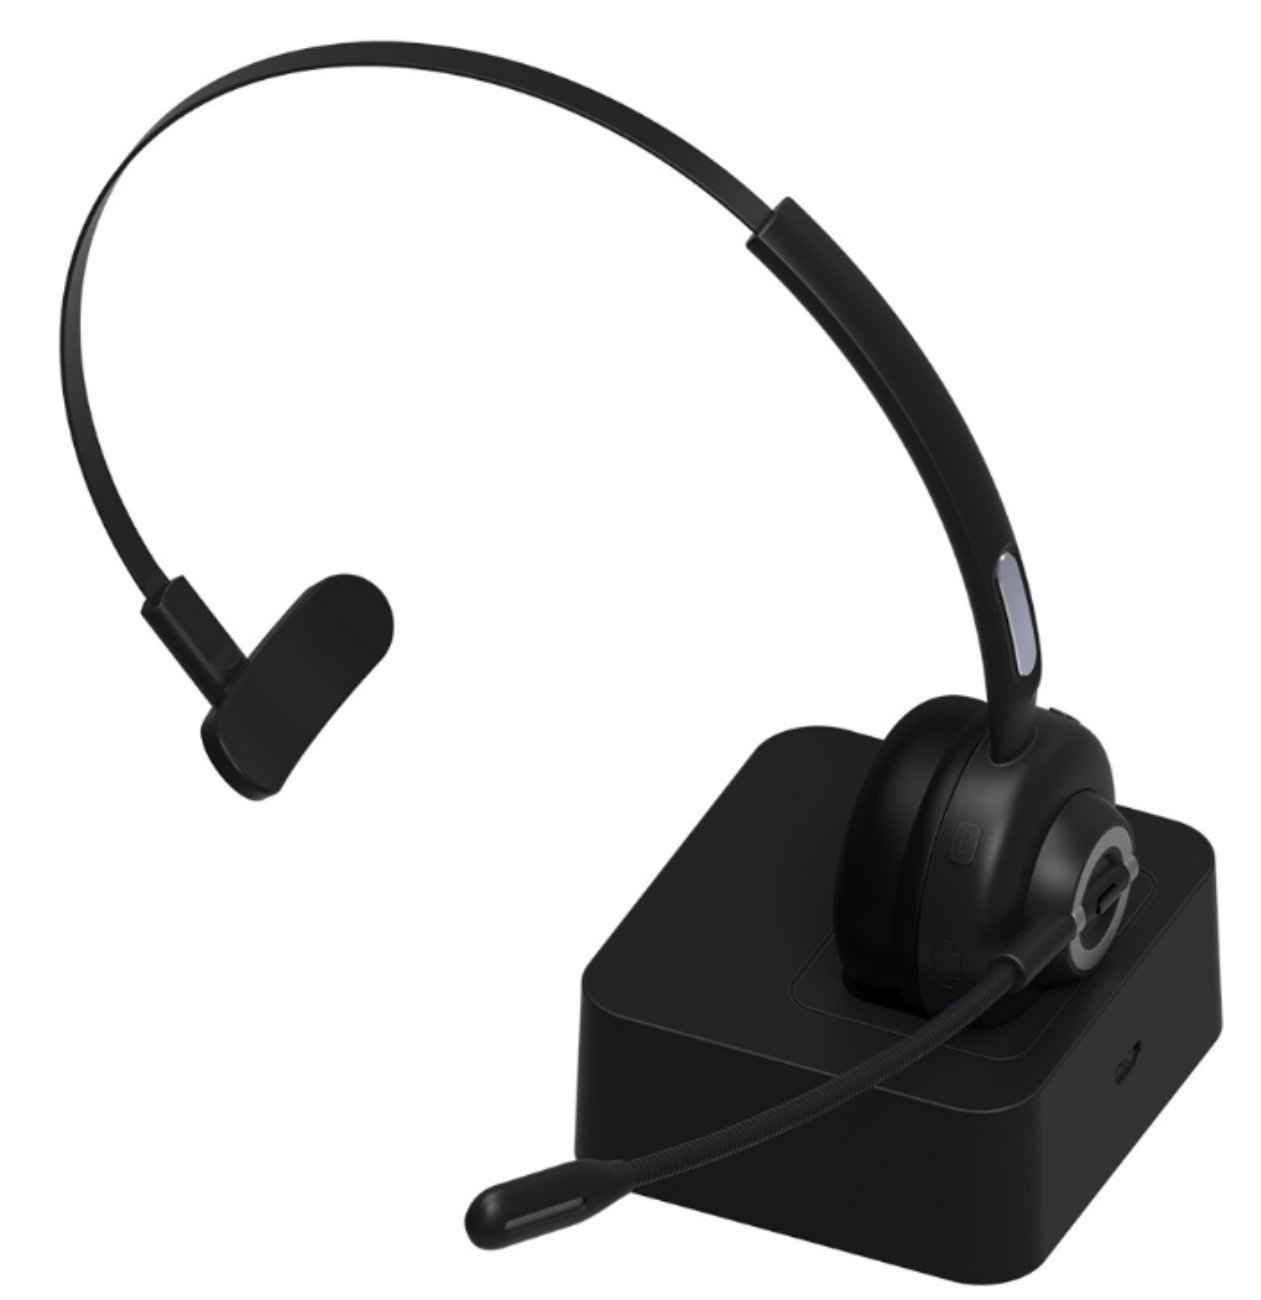 Headphone Wireless Headset, Freisprecheinrichtung Freisprecheinrichtung, NABO Schwarz